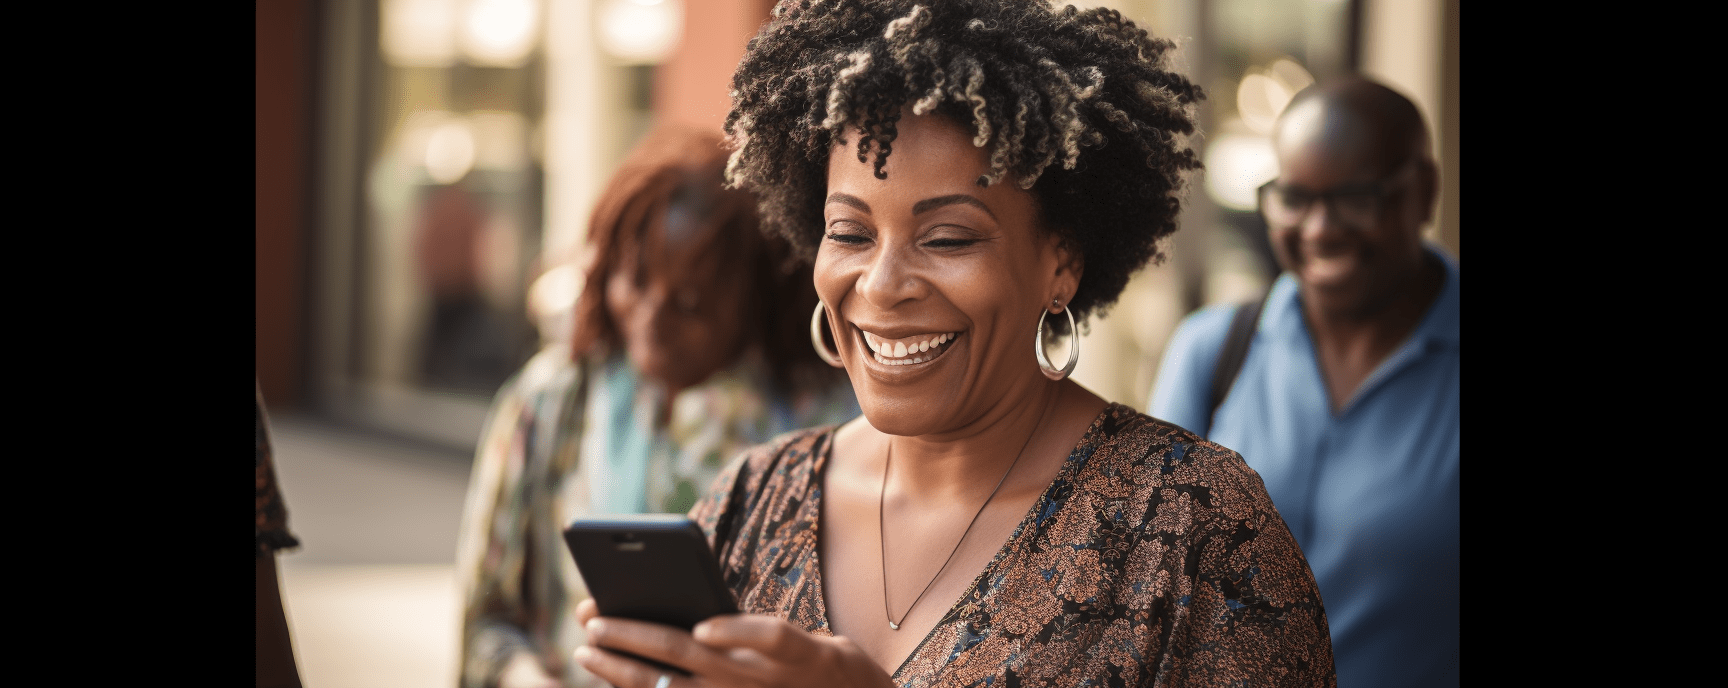 woman happy on phone connected via the lifeline program